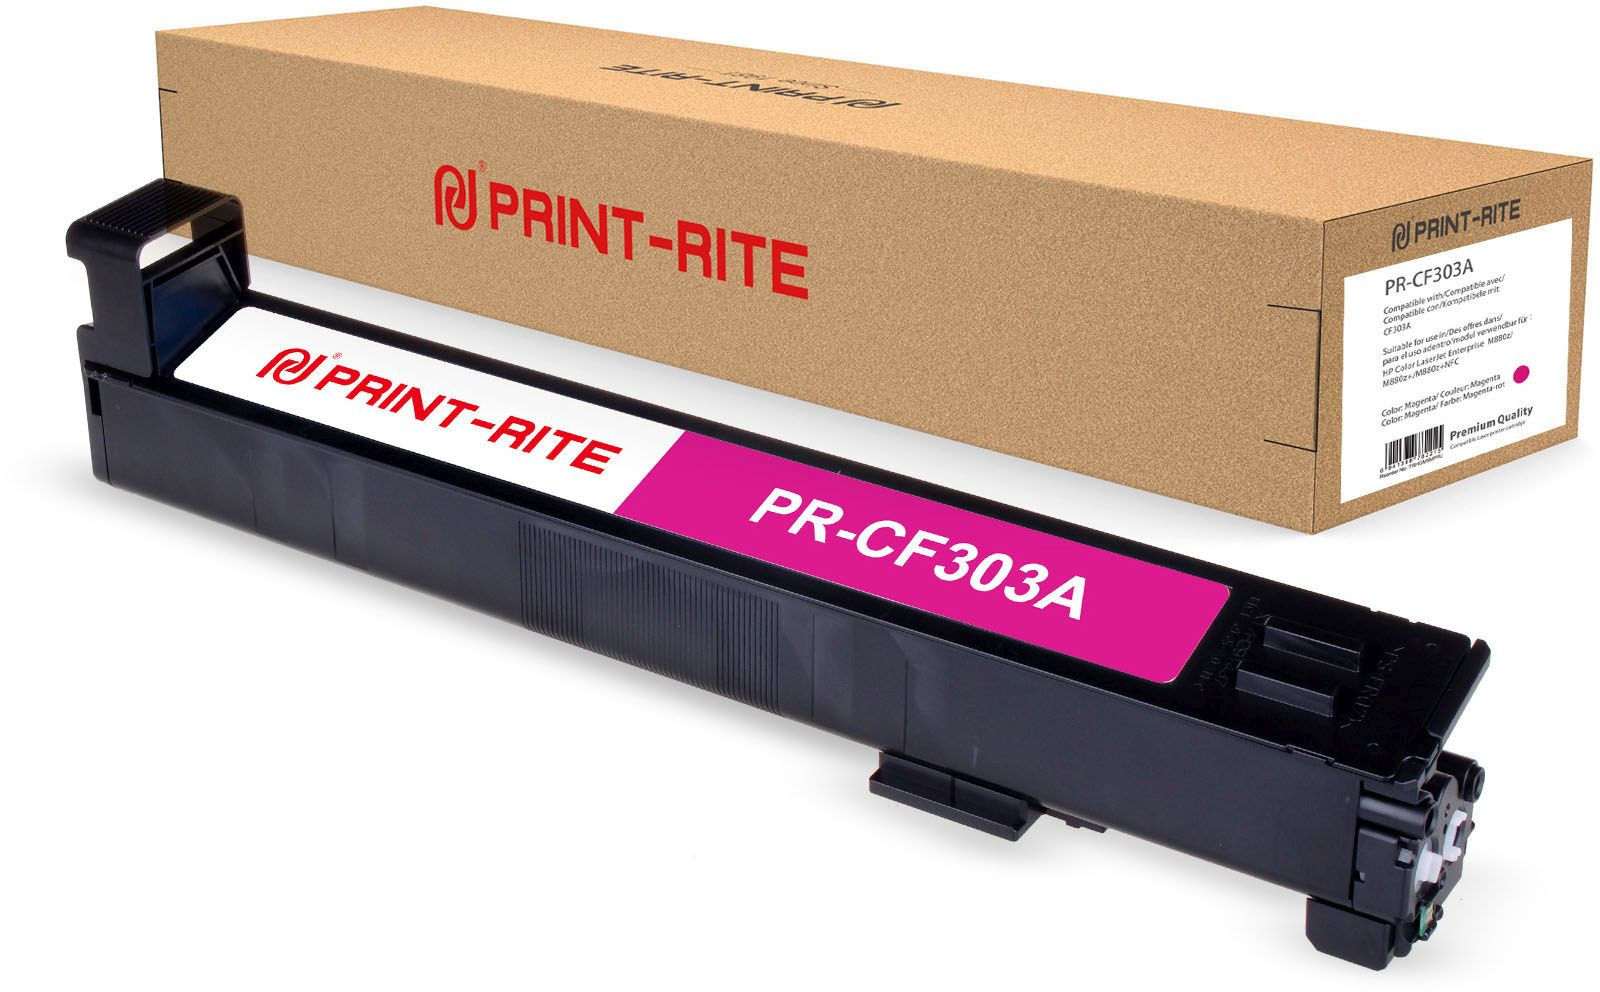   Print-Rite TRHGM9MPRJ PR-CF303A CF303A  (30000.)  HP CLJ Ent M880